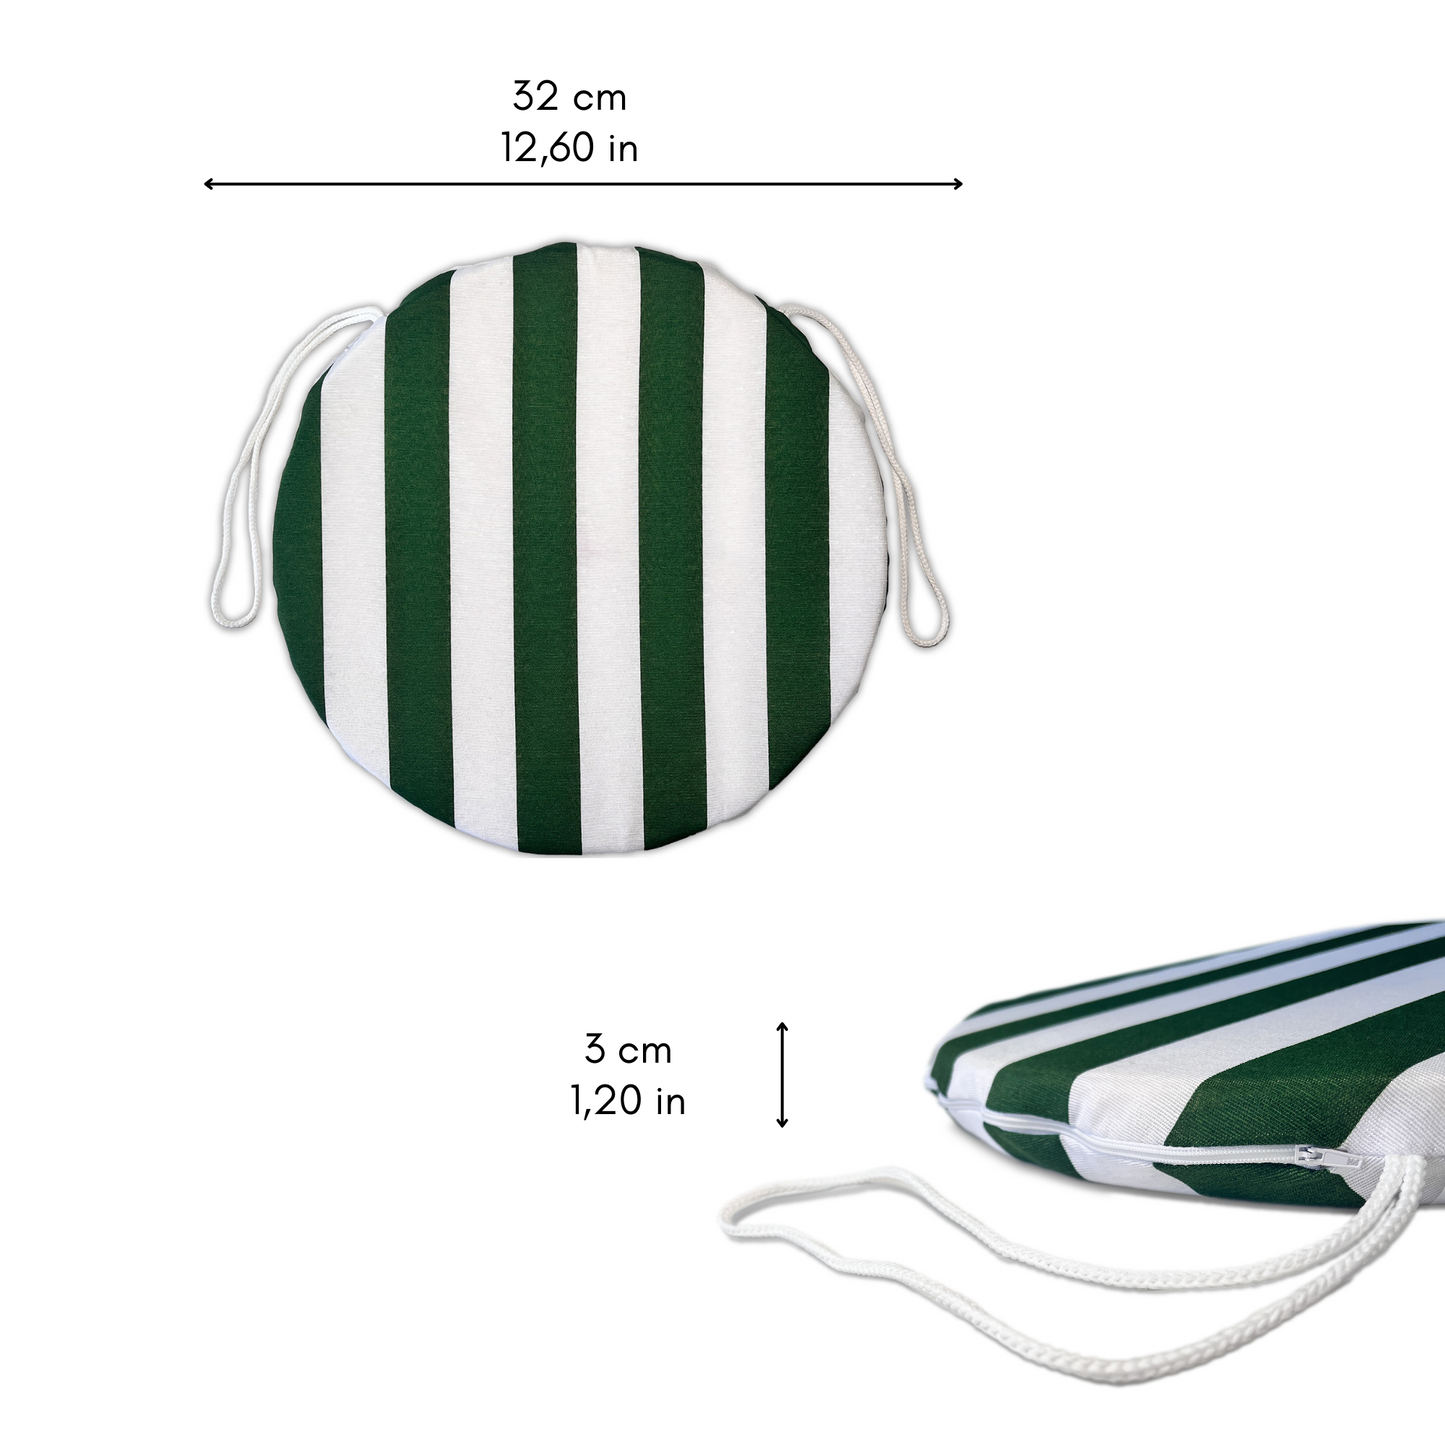 Set 6 cuscini Copri Sedie sfoderabili Bianco e Verde - Linea Sorrento